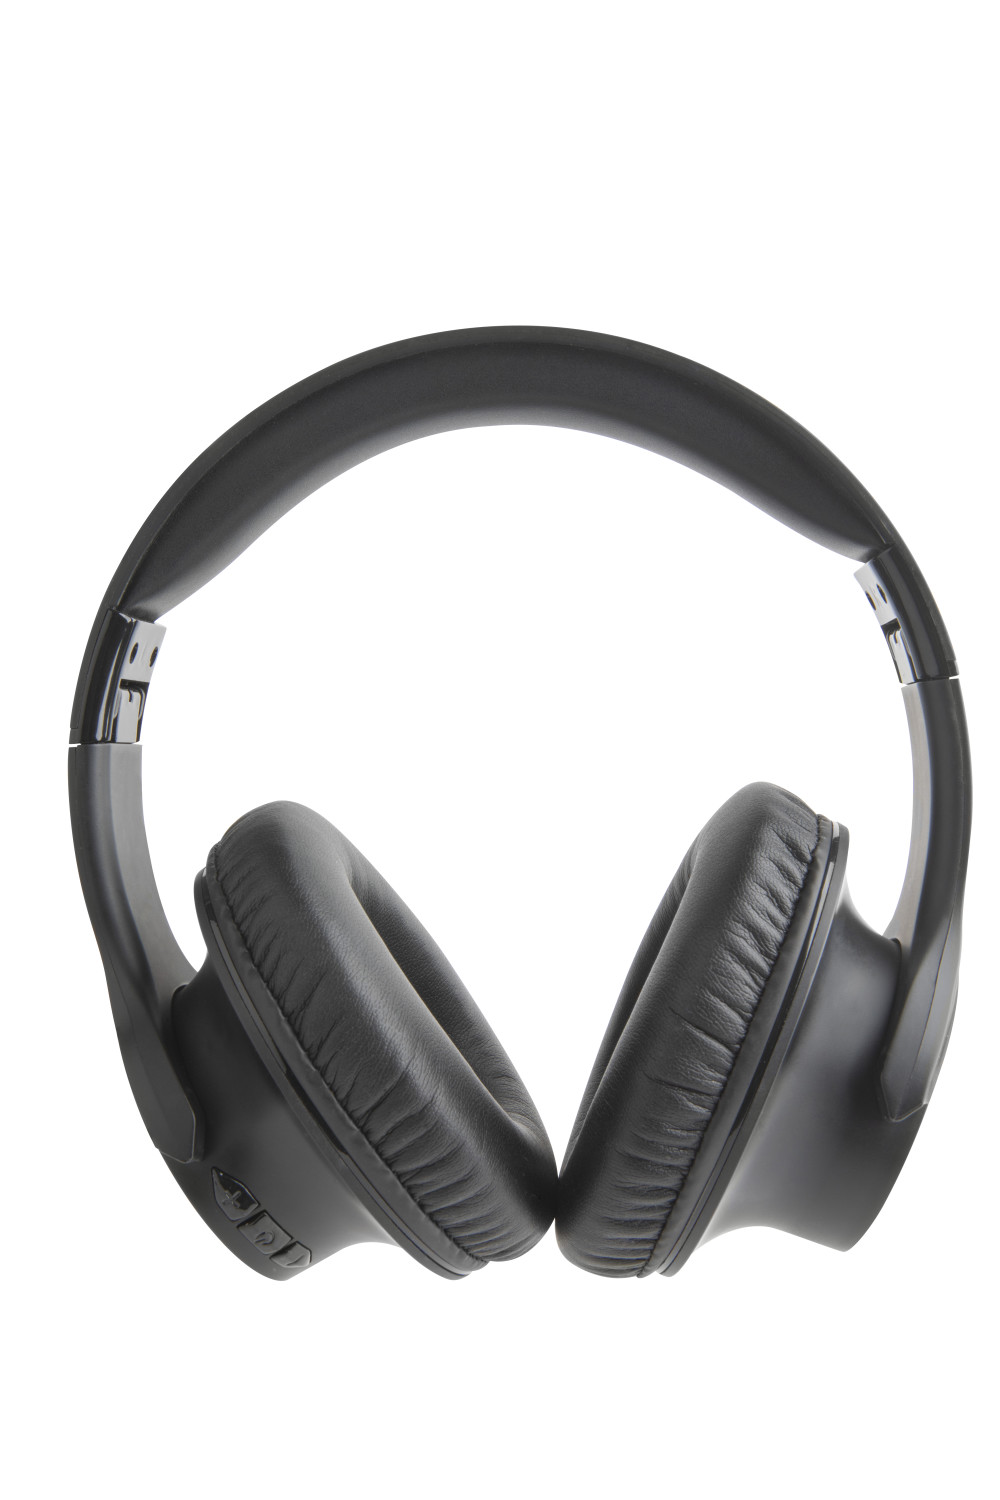 Altec Lansing R3volution X Bluetooth On-Ear Headphones, Noise-Canceling, Black, MZX009-BLK - image 4 of 5